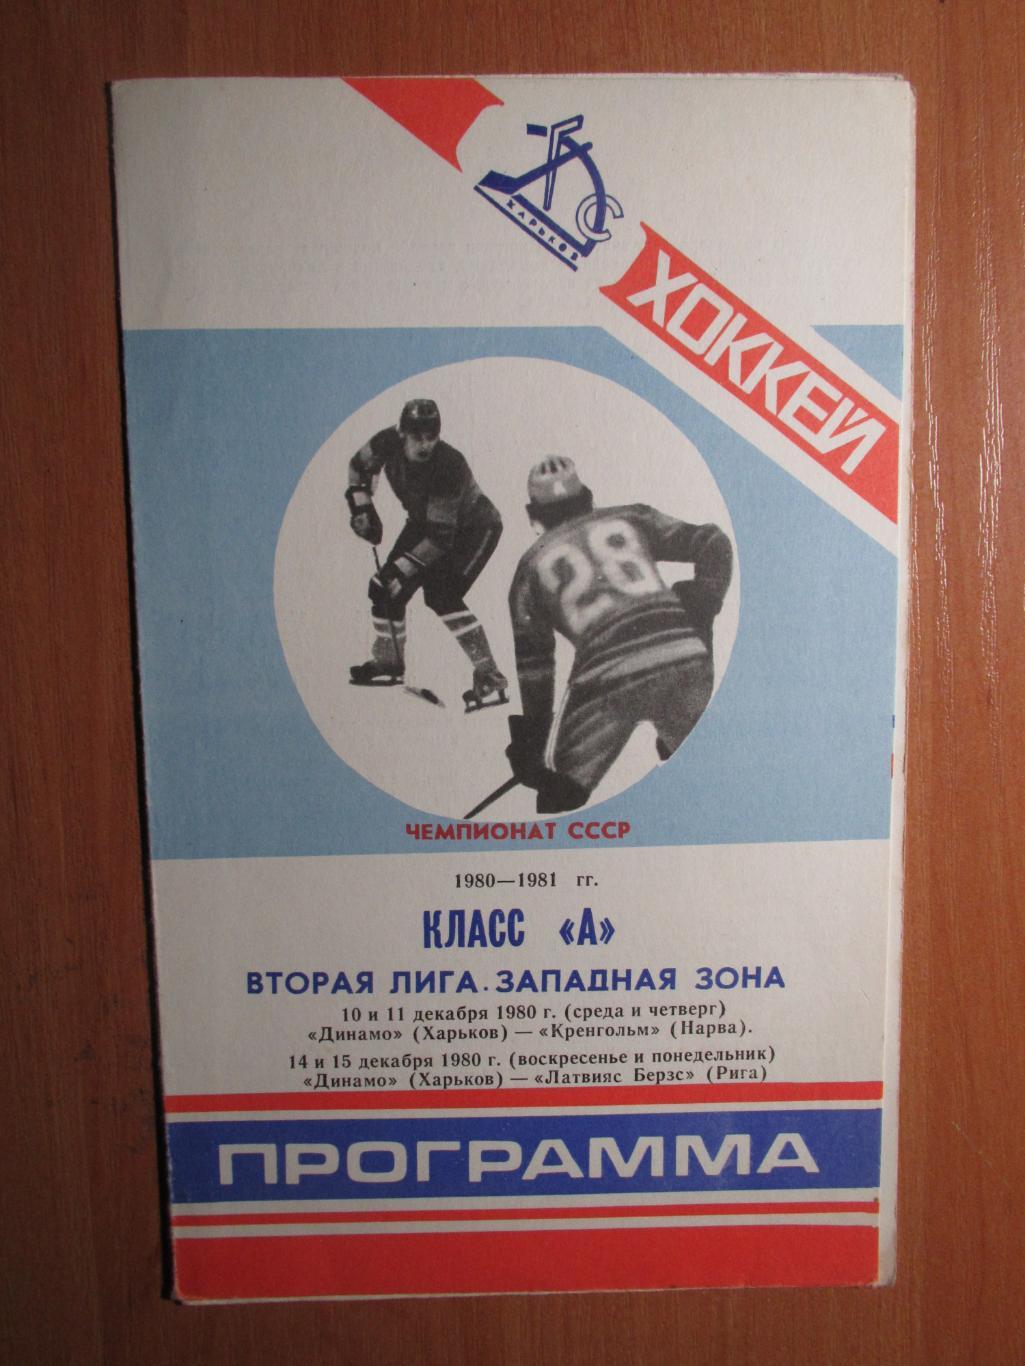 Динамо Харьков-Кренгольм Нарва 10-11.12.1980/- Латвияс Берзс Рига 14-15.12.1980